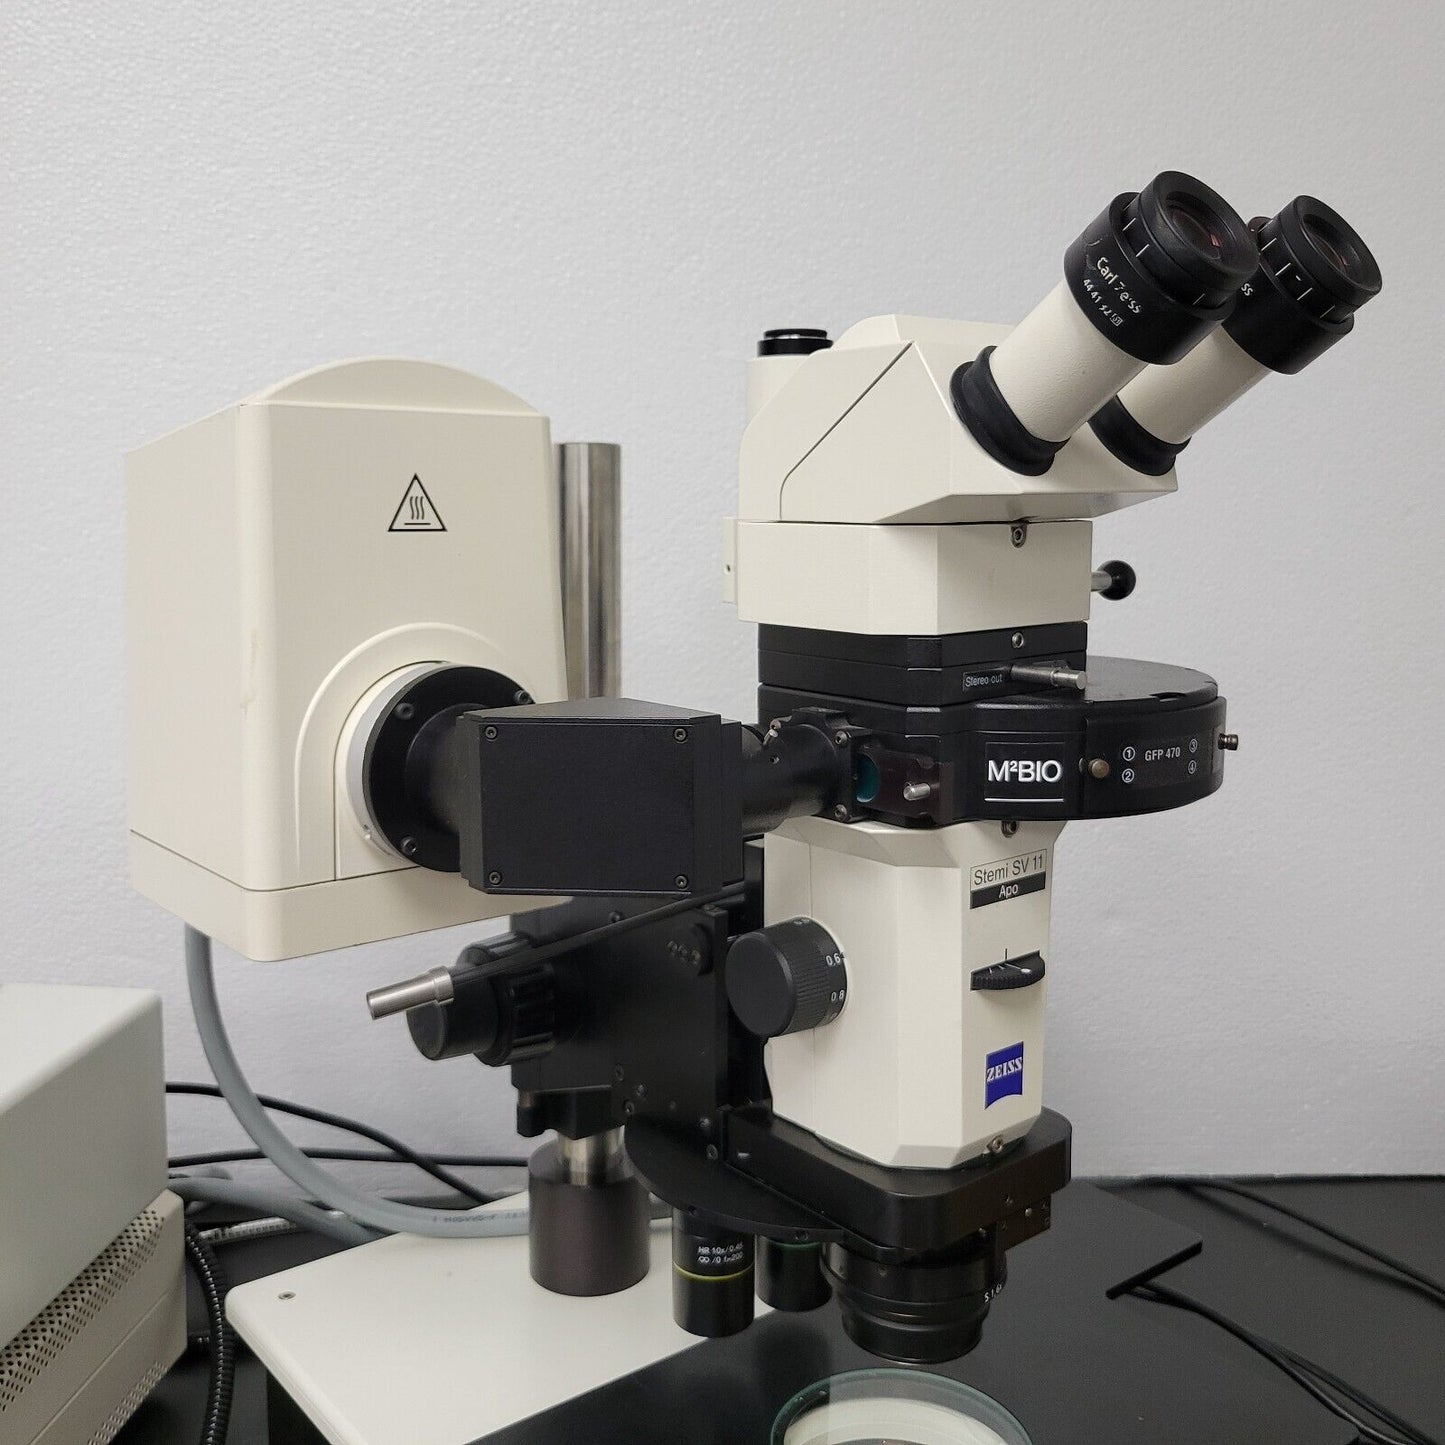 Zeiss Kramer Stereo Microscope Stemi SV11 Apo w. Fluorescence & Triple Nosepiece - microscopemarketplace